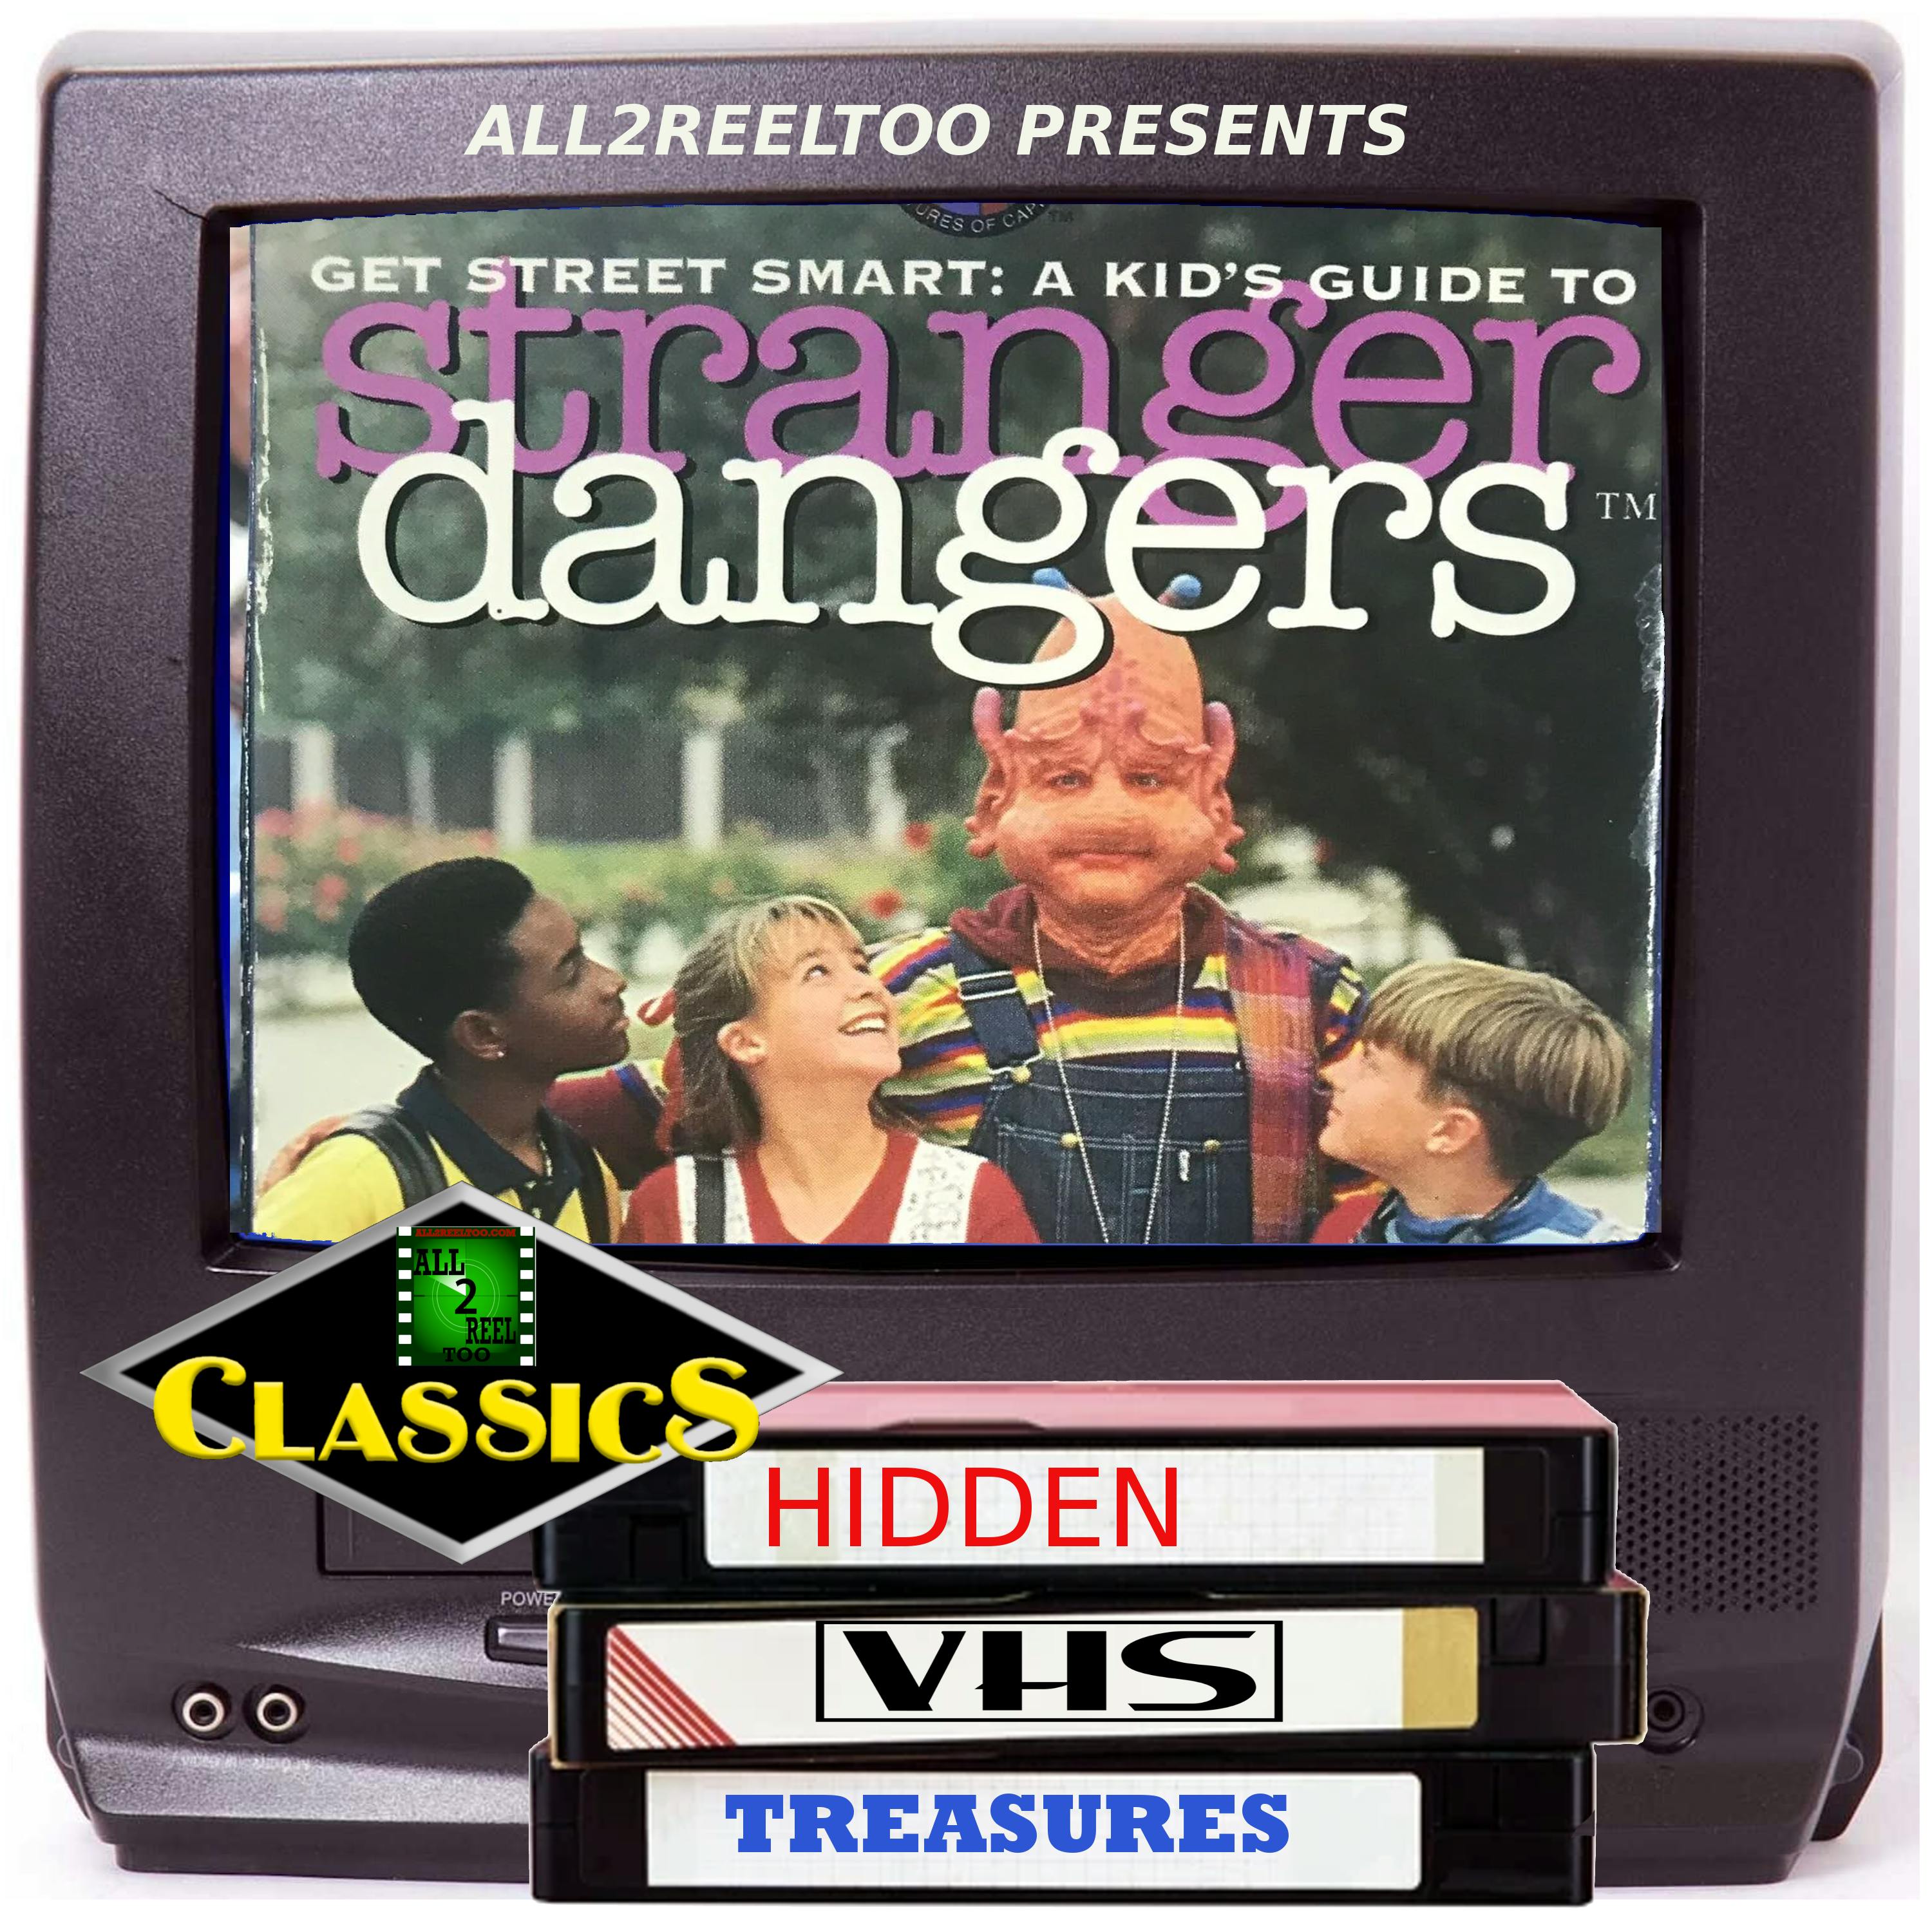 Get Street Smart: A Kid’s Guide To Stranger Dangers (1995) - HIDDEN VHS TREASURES - ALL2REELTOO CLASSICS